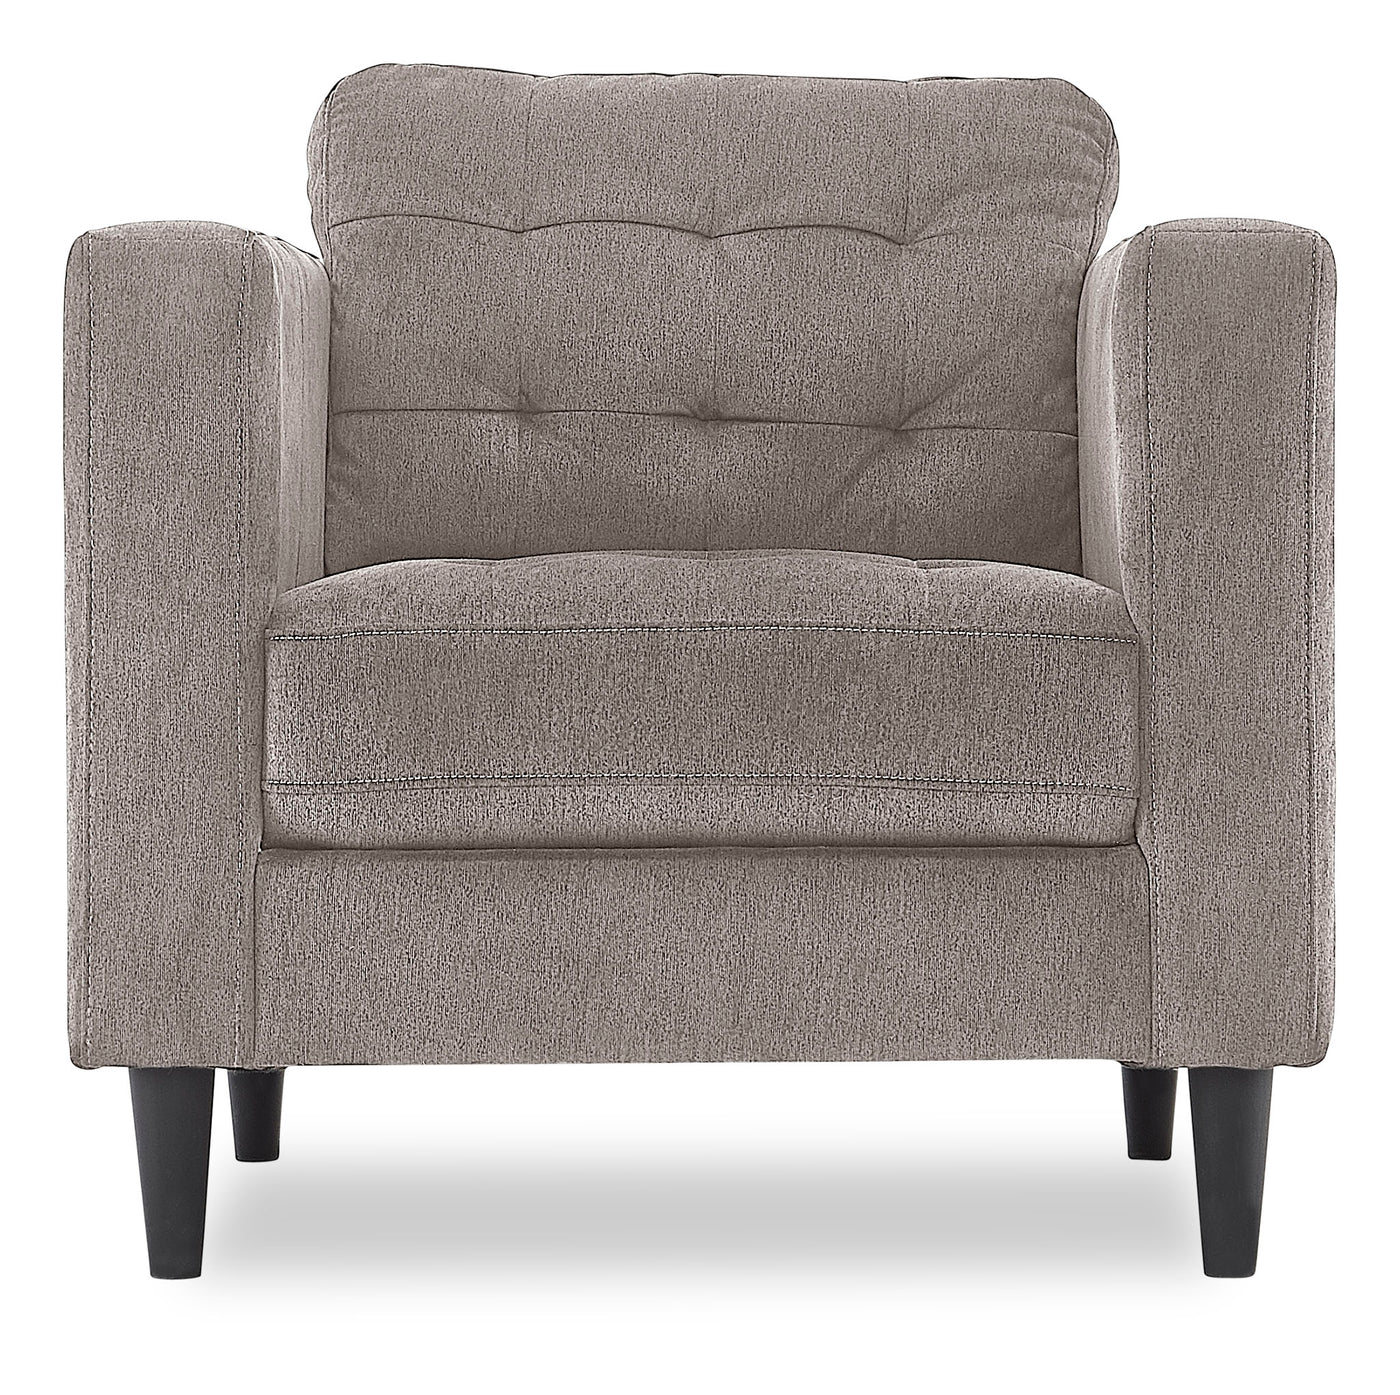 Anthena Sofa and Chair Set - Light Grey